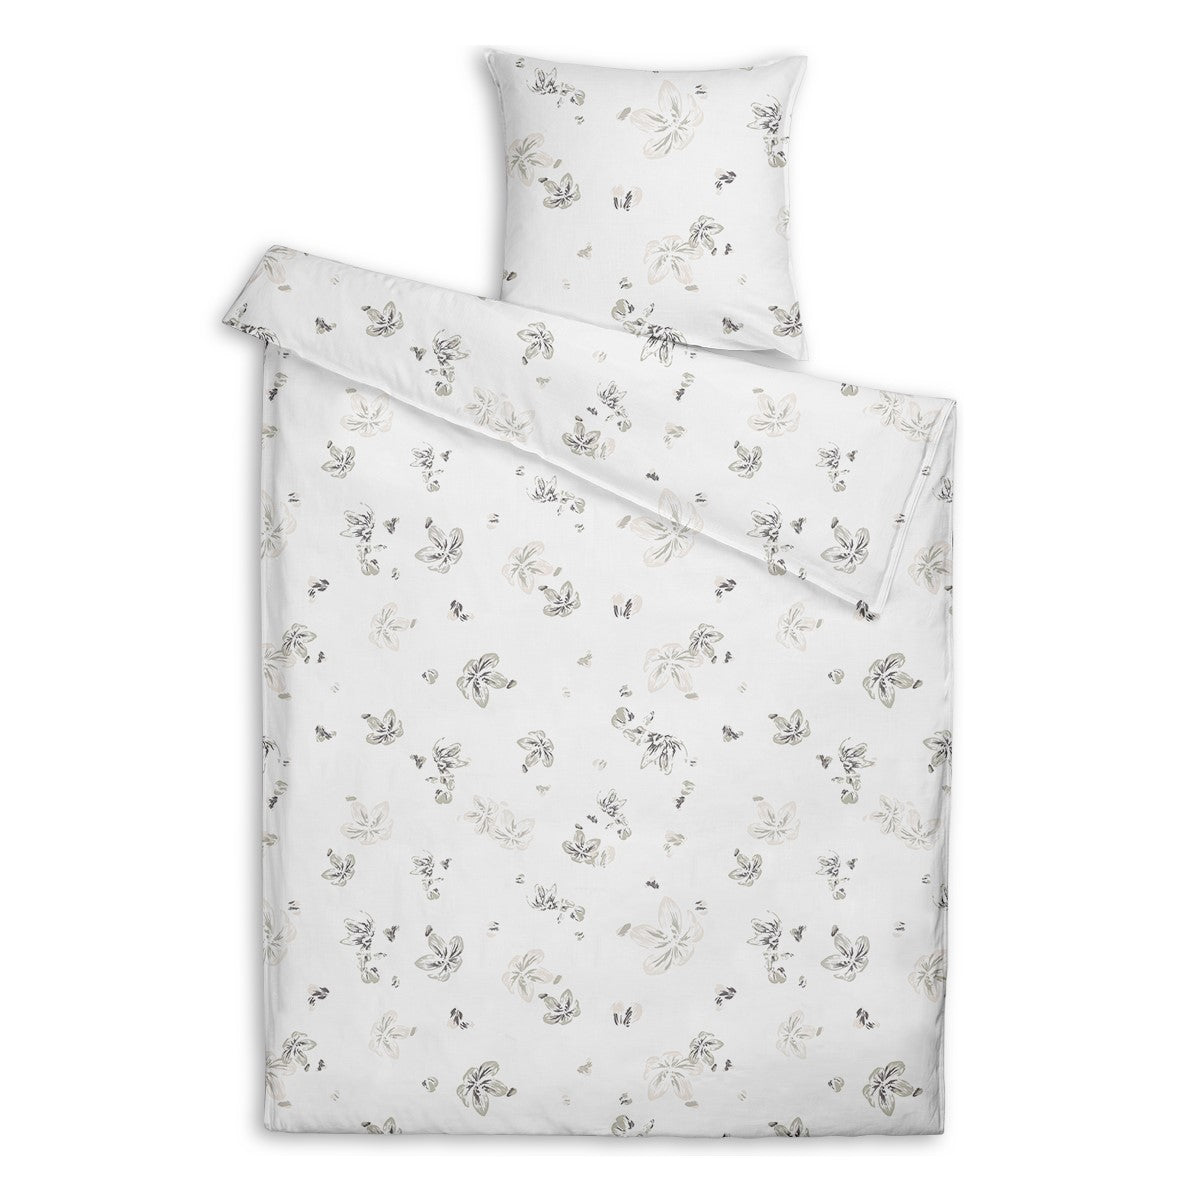 Bæk og bølge sengetøj – Kirsebær Beige 140x220 cm